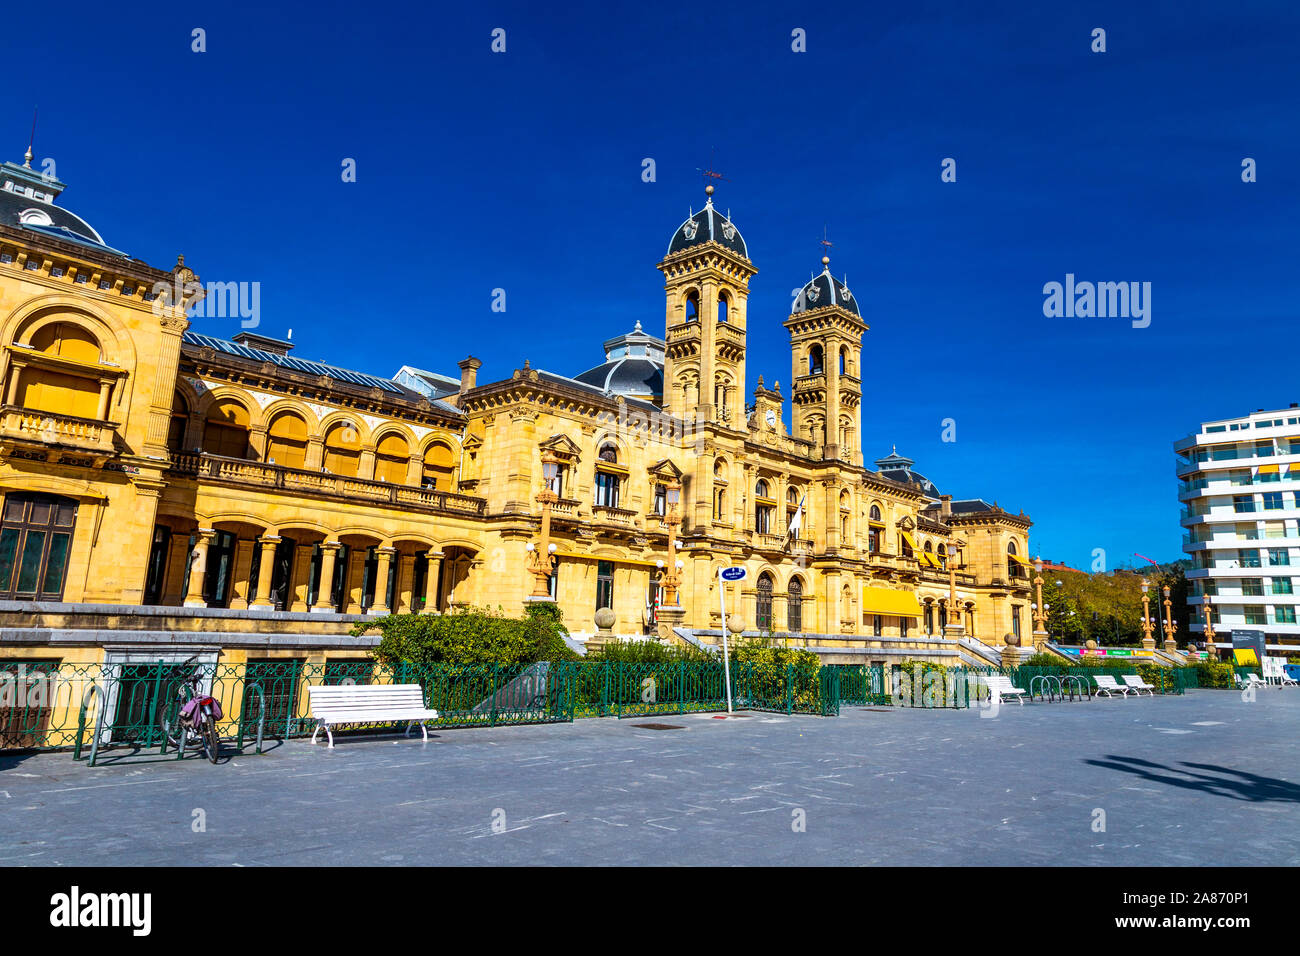 City Hall building, a former casino, not the City Council headquarters, San Sebastian, Spain Stock Photo